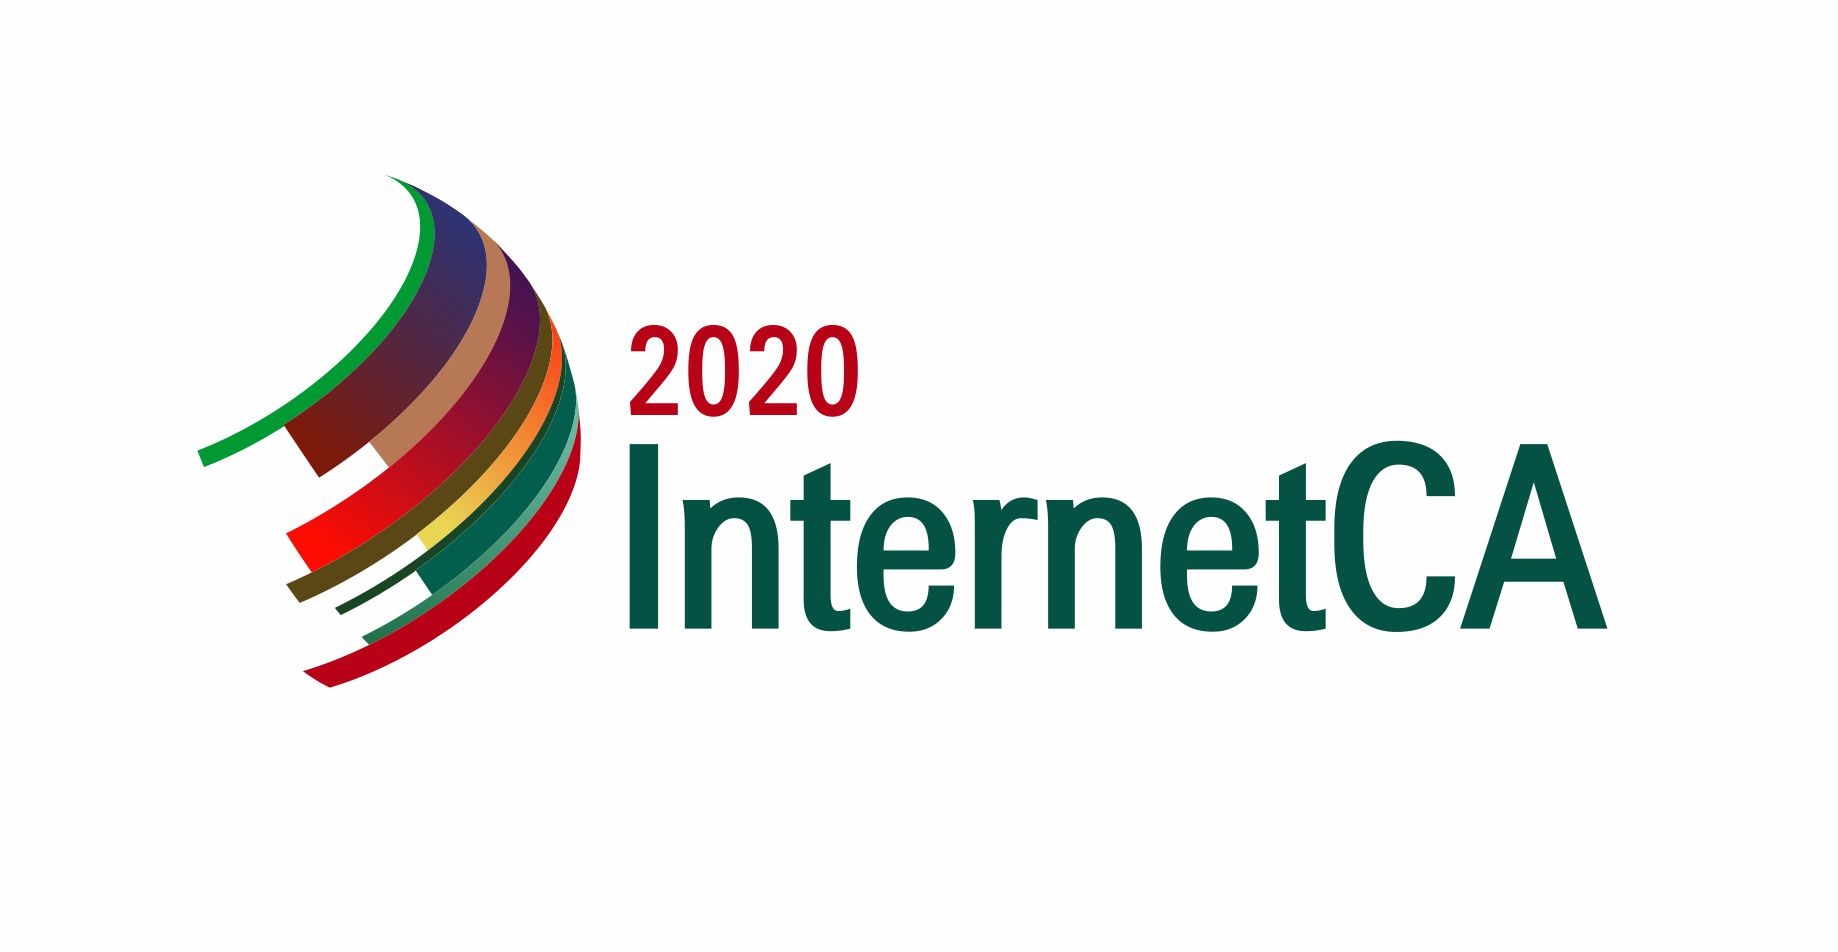 Gnomon Wise -ის მკვლევარი დავით ქუტიძე სტუმრად ცენტრალური აზიის XI ფორუმზე: "InternetCA-2020 განვითარება ცენტრალურ აზიაში"